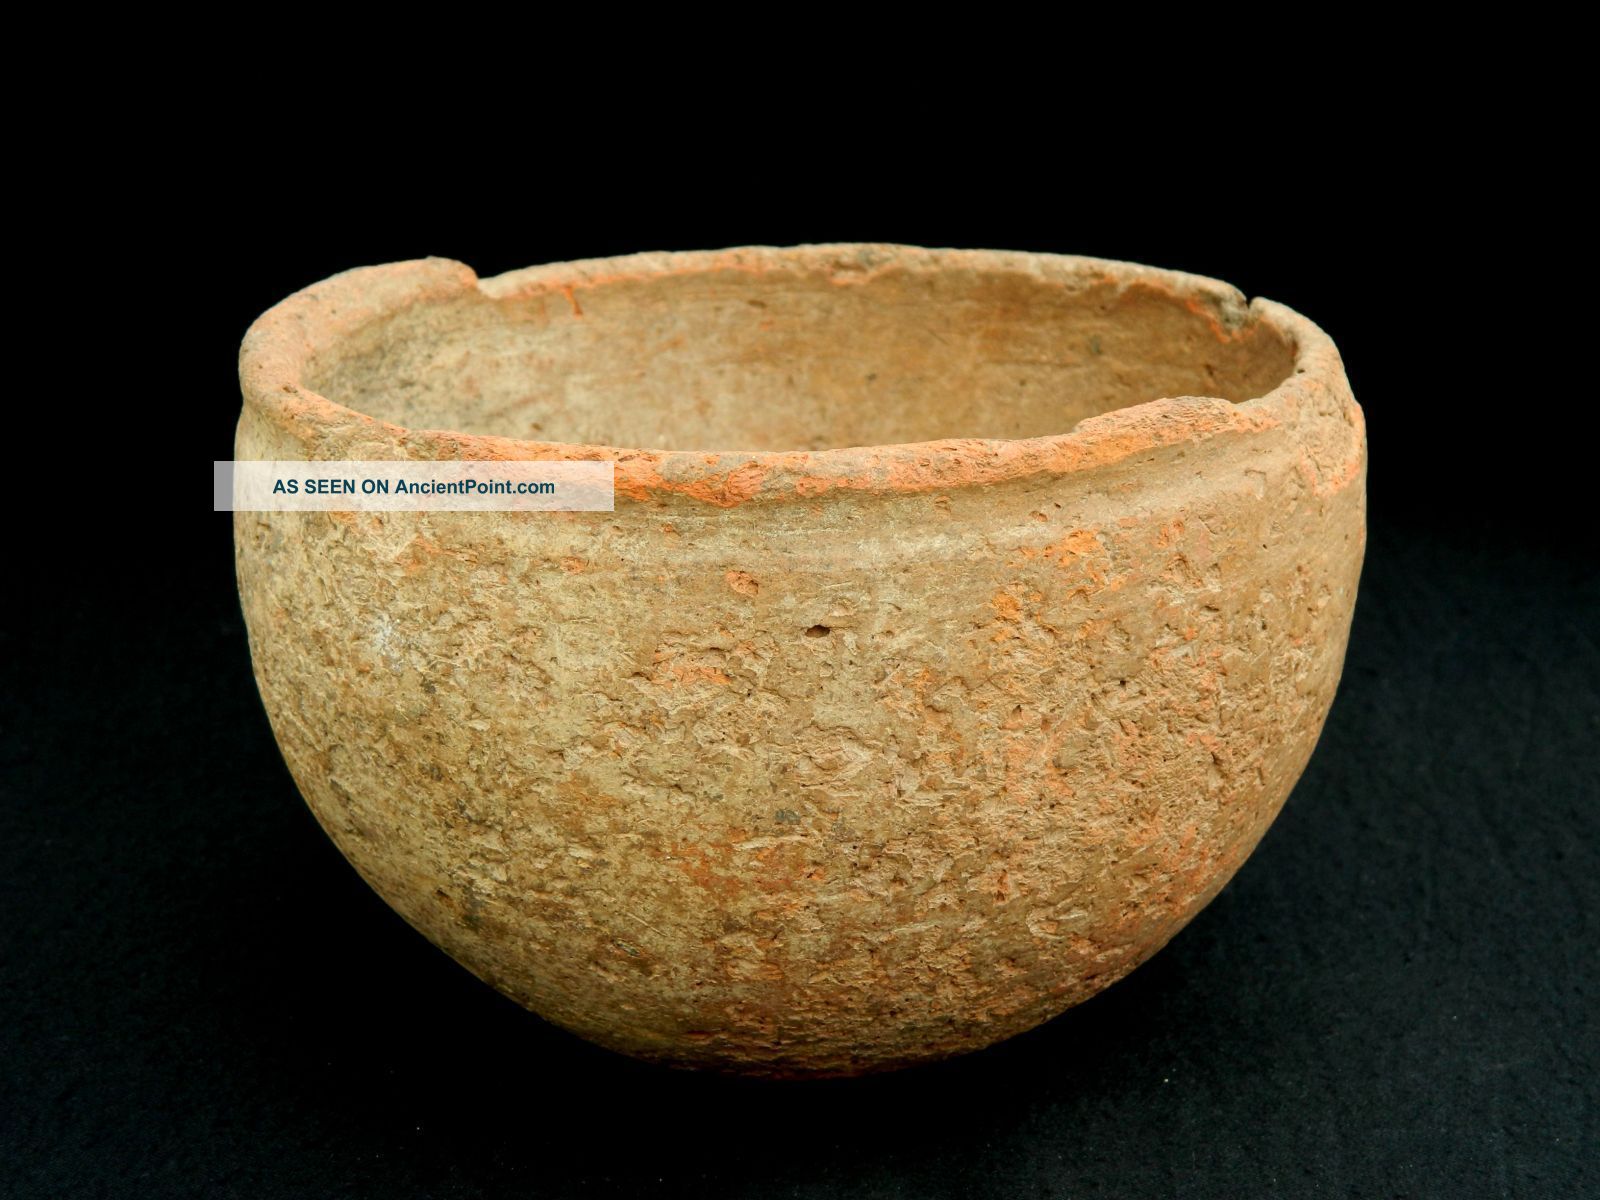 Neolithic Neolithique Terracotta Pot - 4000 Years Before Present - Sahara Neolithic & Paleolithic photo